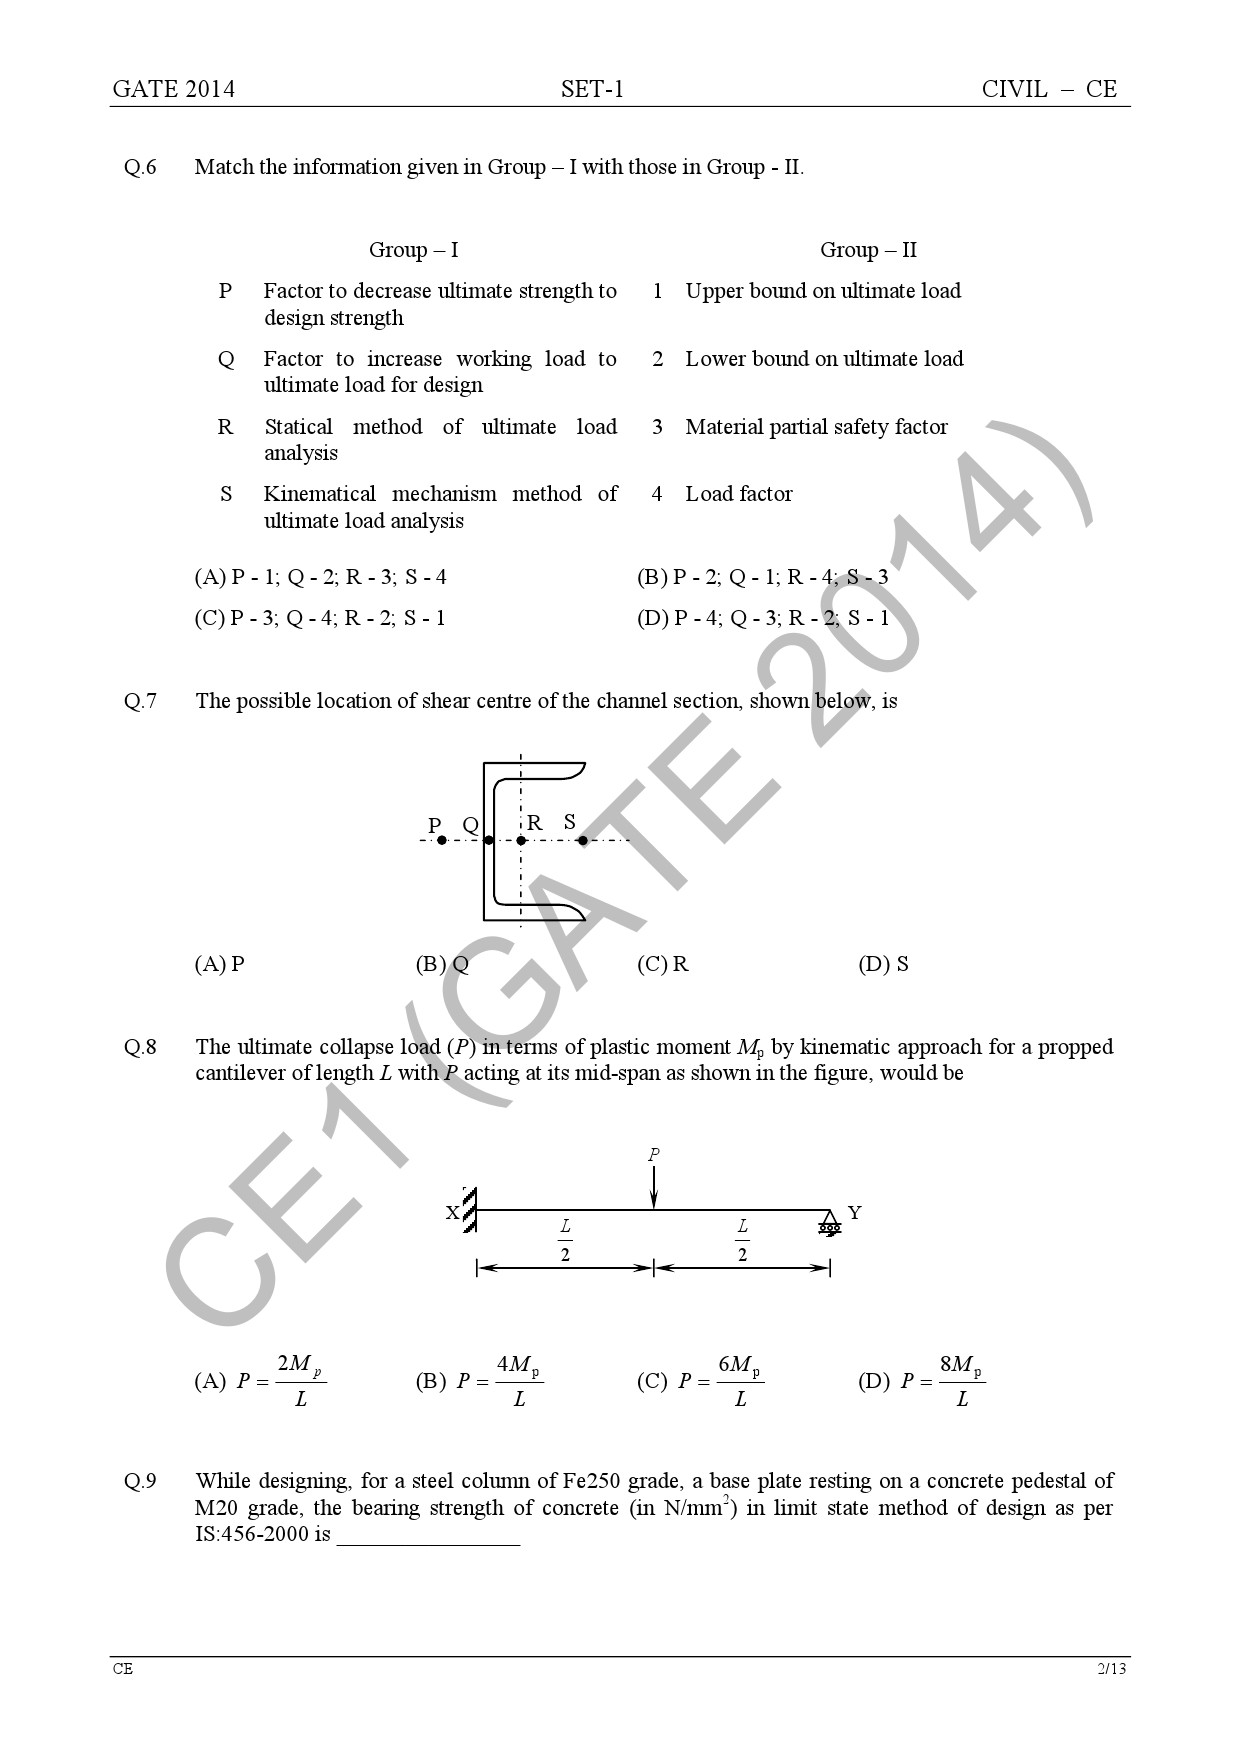 GATE Exam Question Paper 2014 Civil Engineering Set 1 8